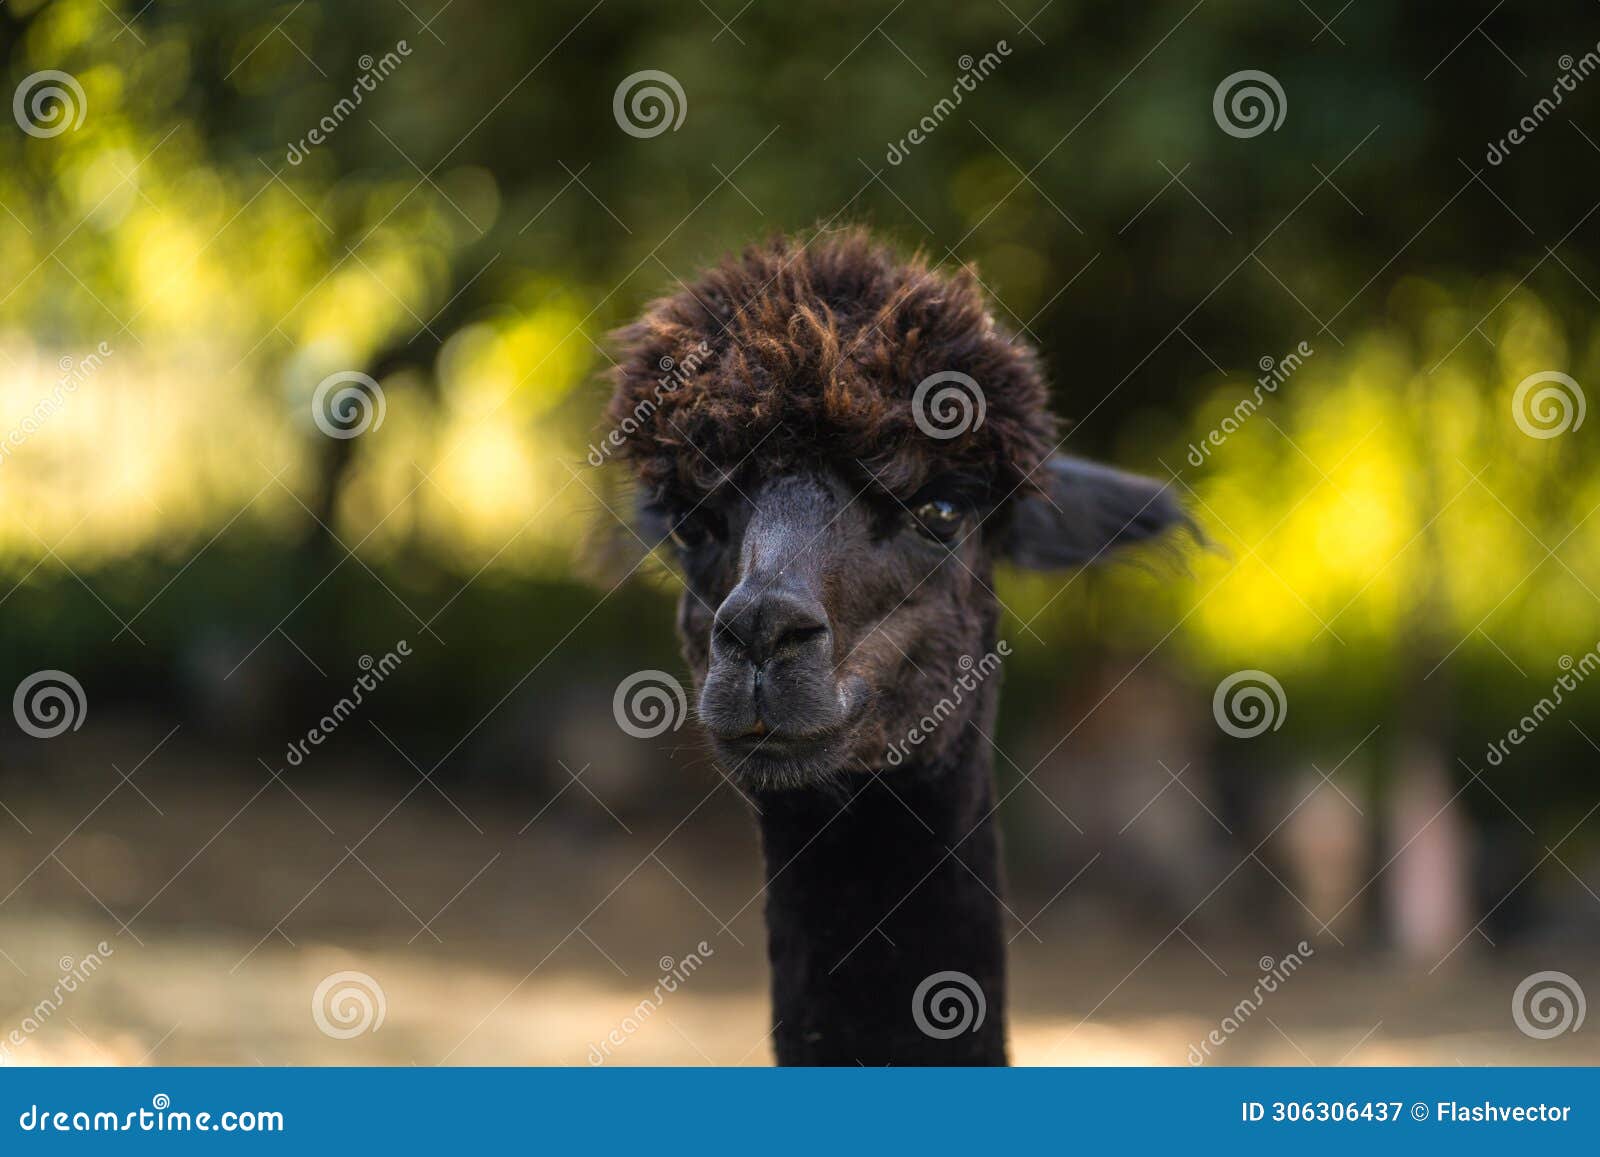 black cria alpaca face and neck portrait, young funny animal